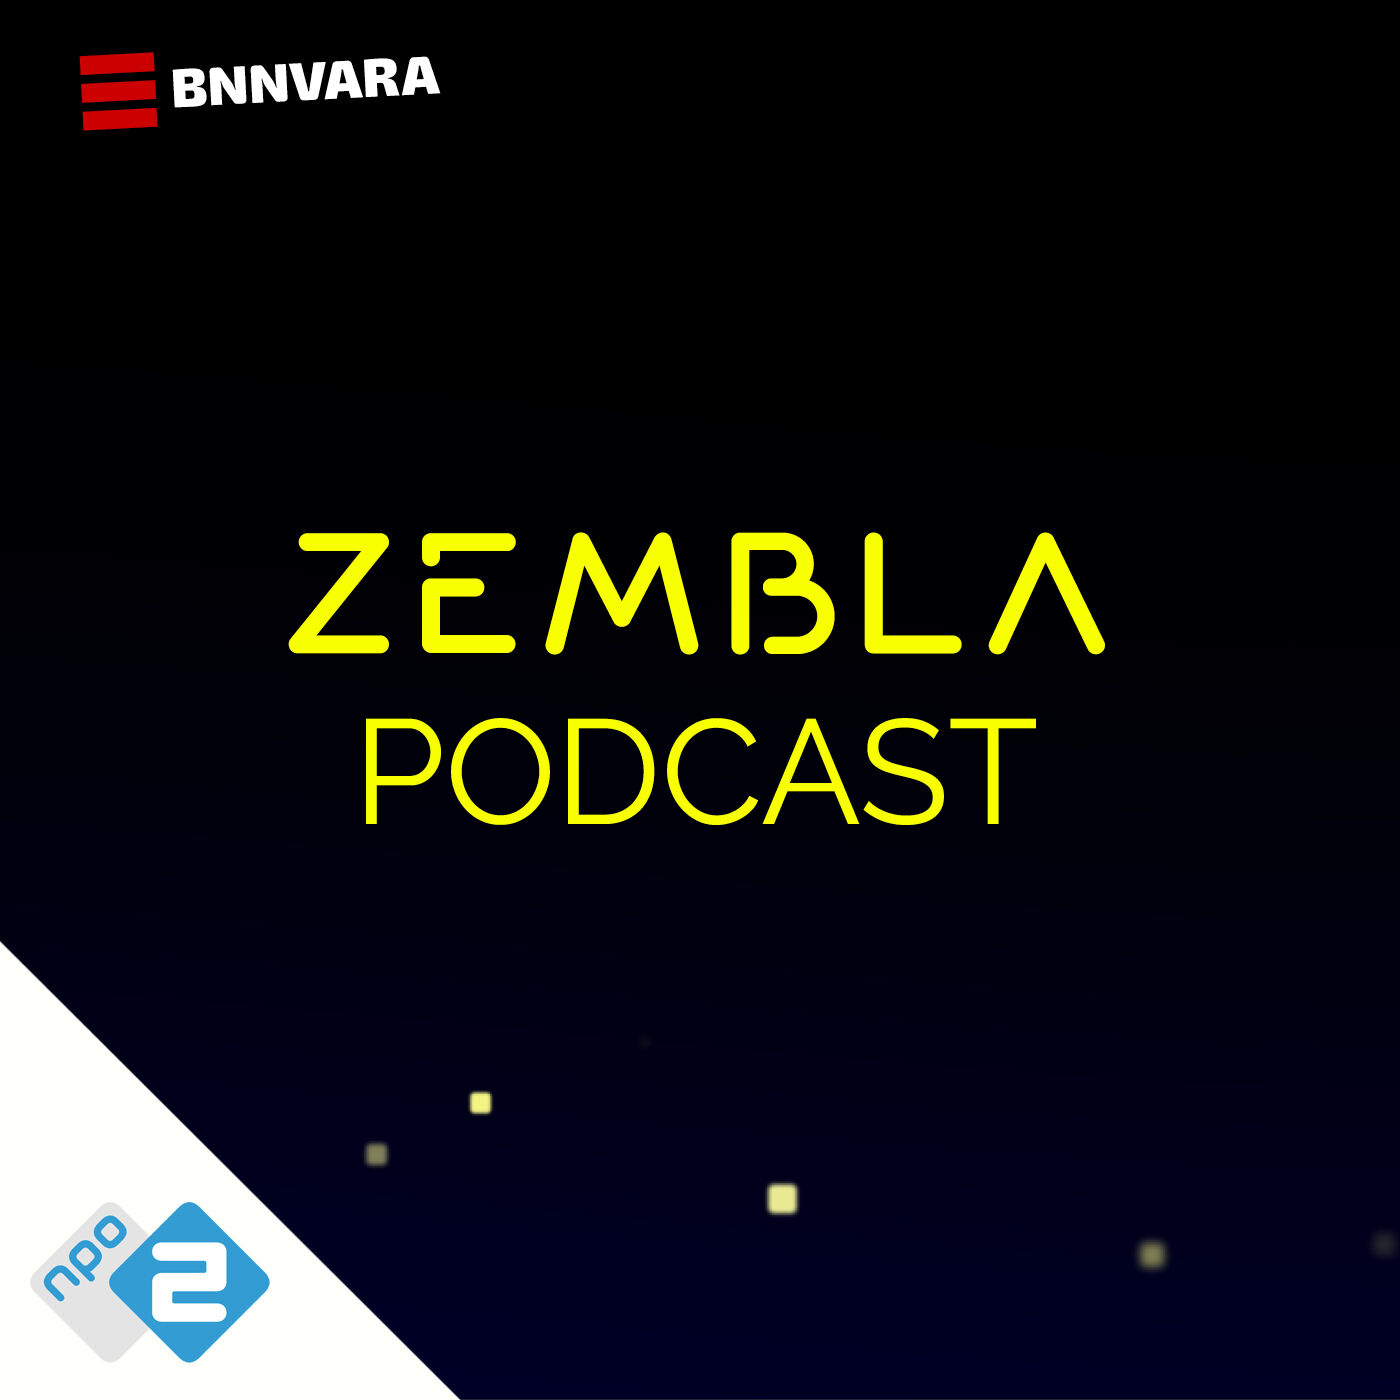 Zembla podcast podcast show image